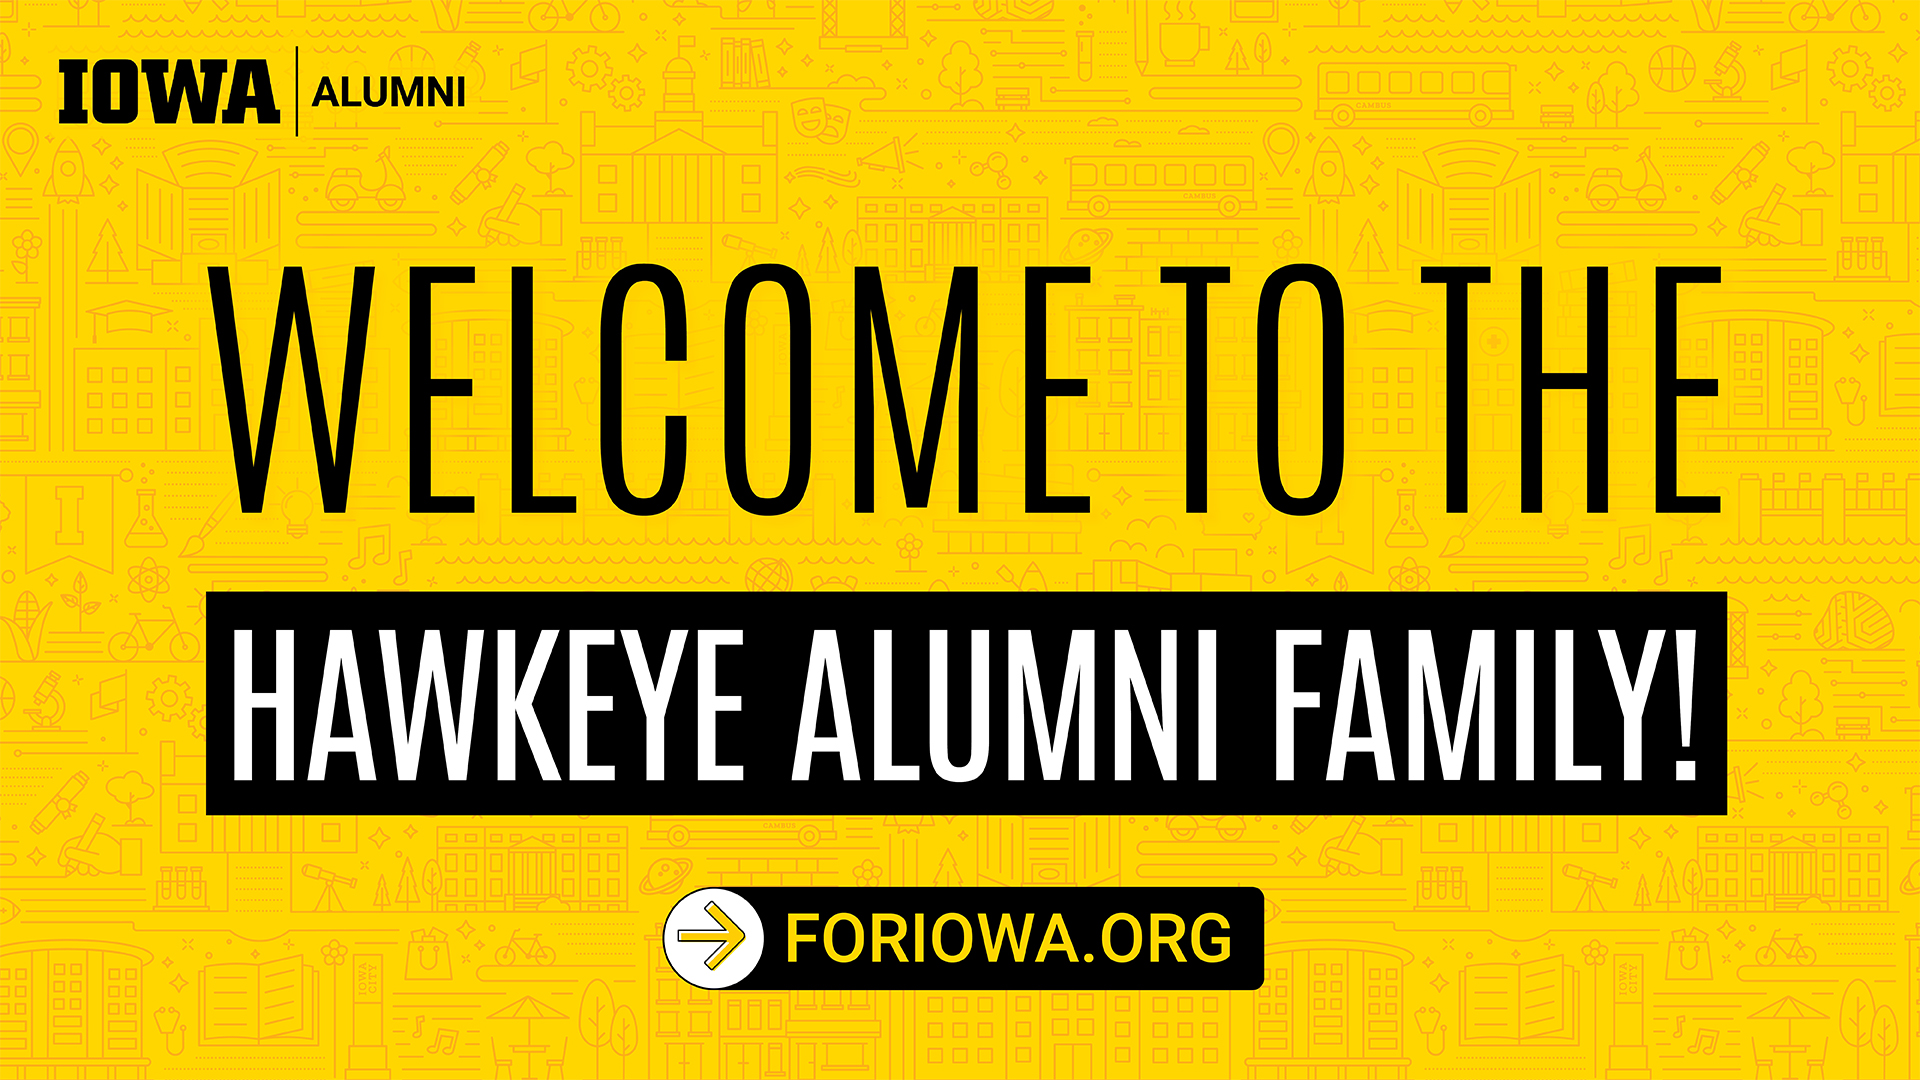 Welcome to the Hawkeye Alumni Family! foriowa.org